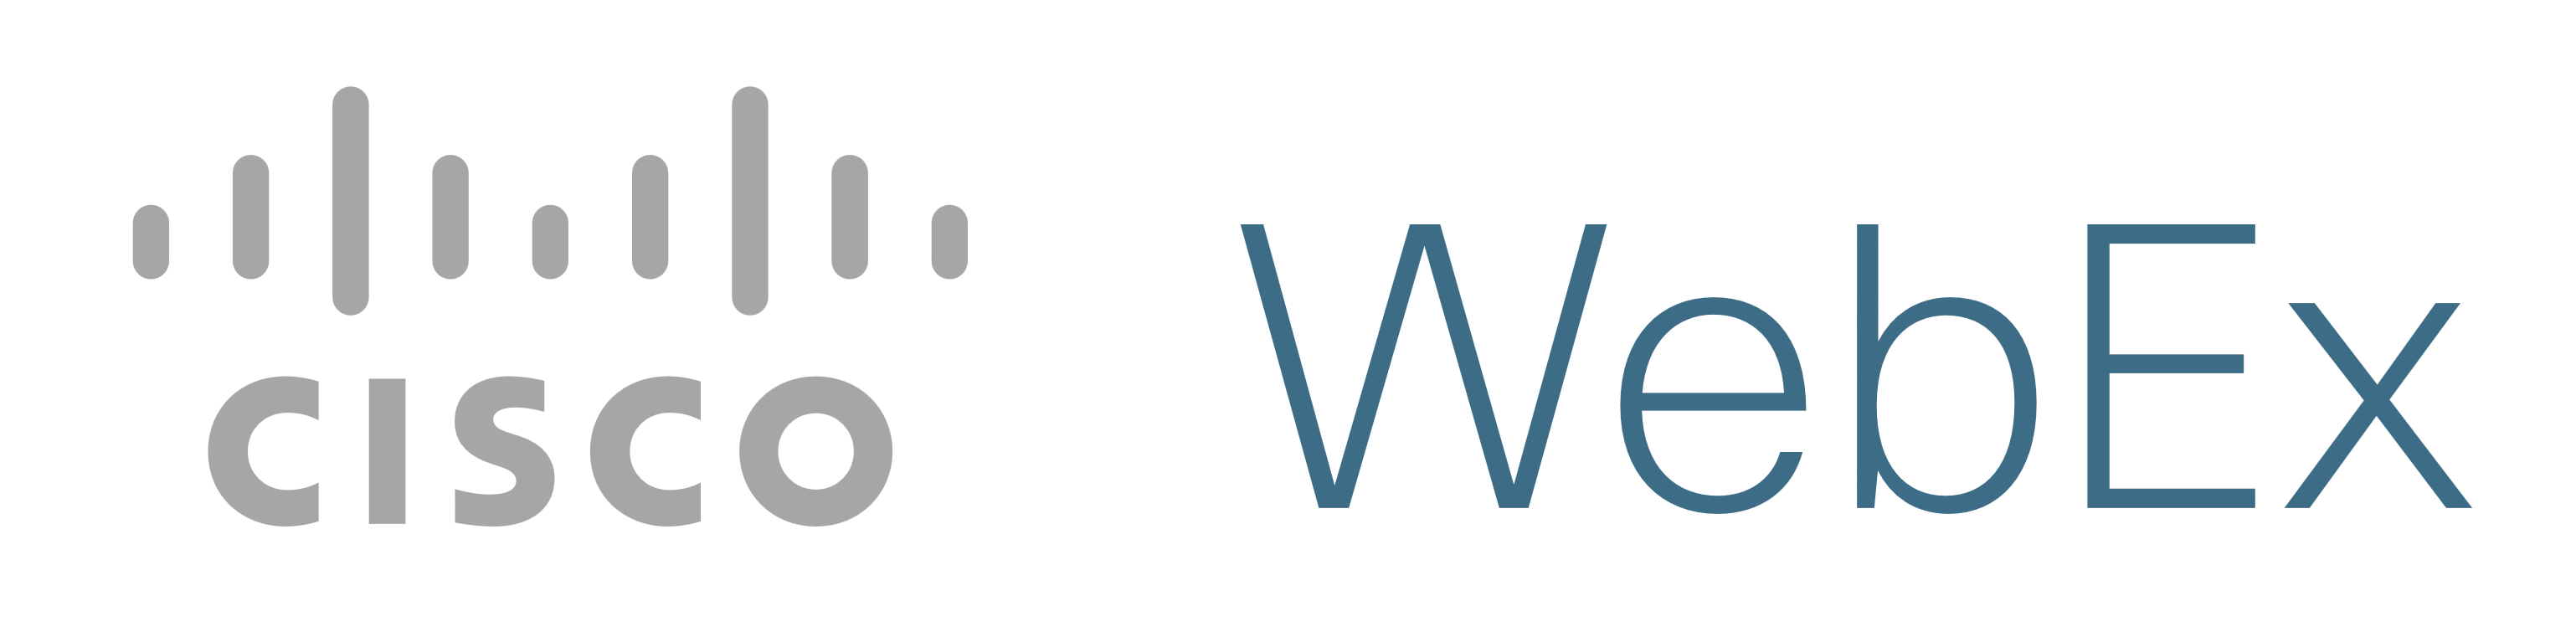 Cisco logo бесплатно PNG Image